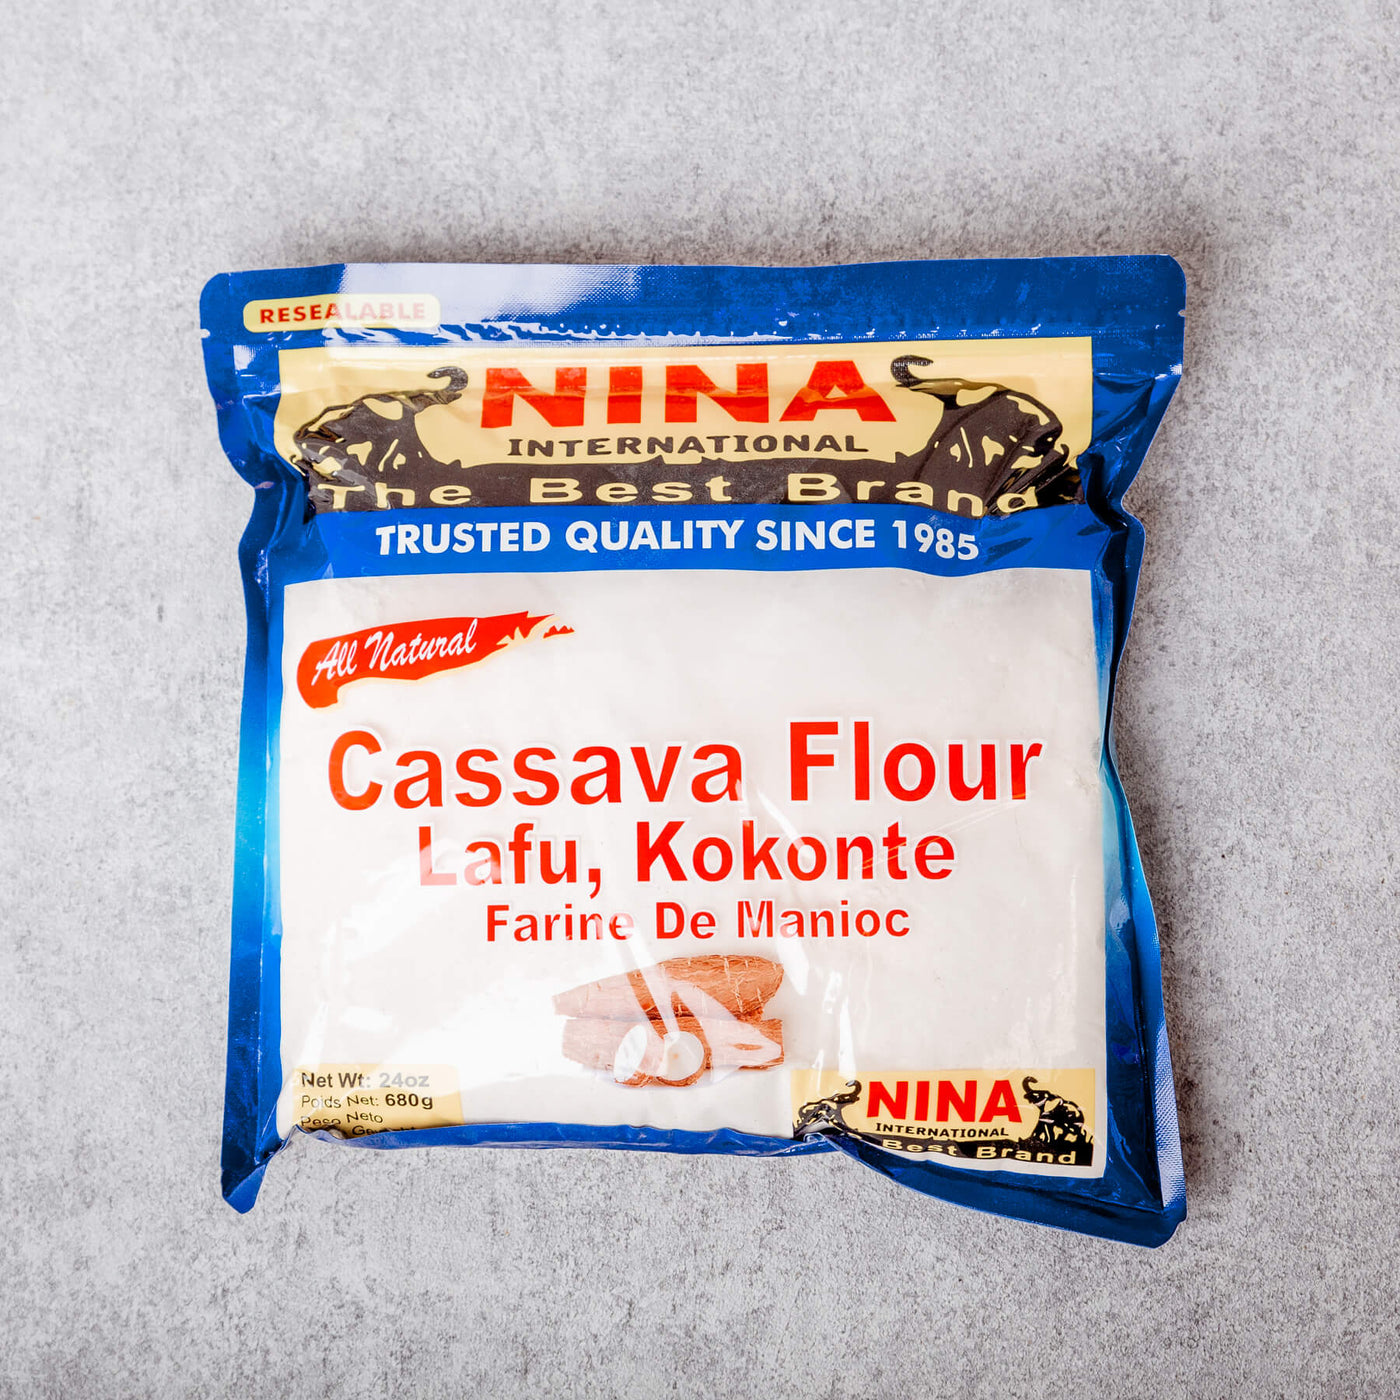 Nina - Cassava Flour